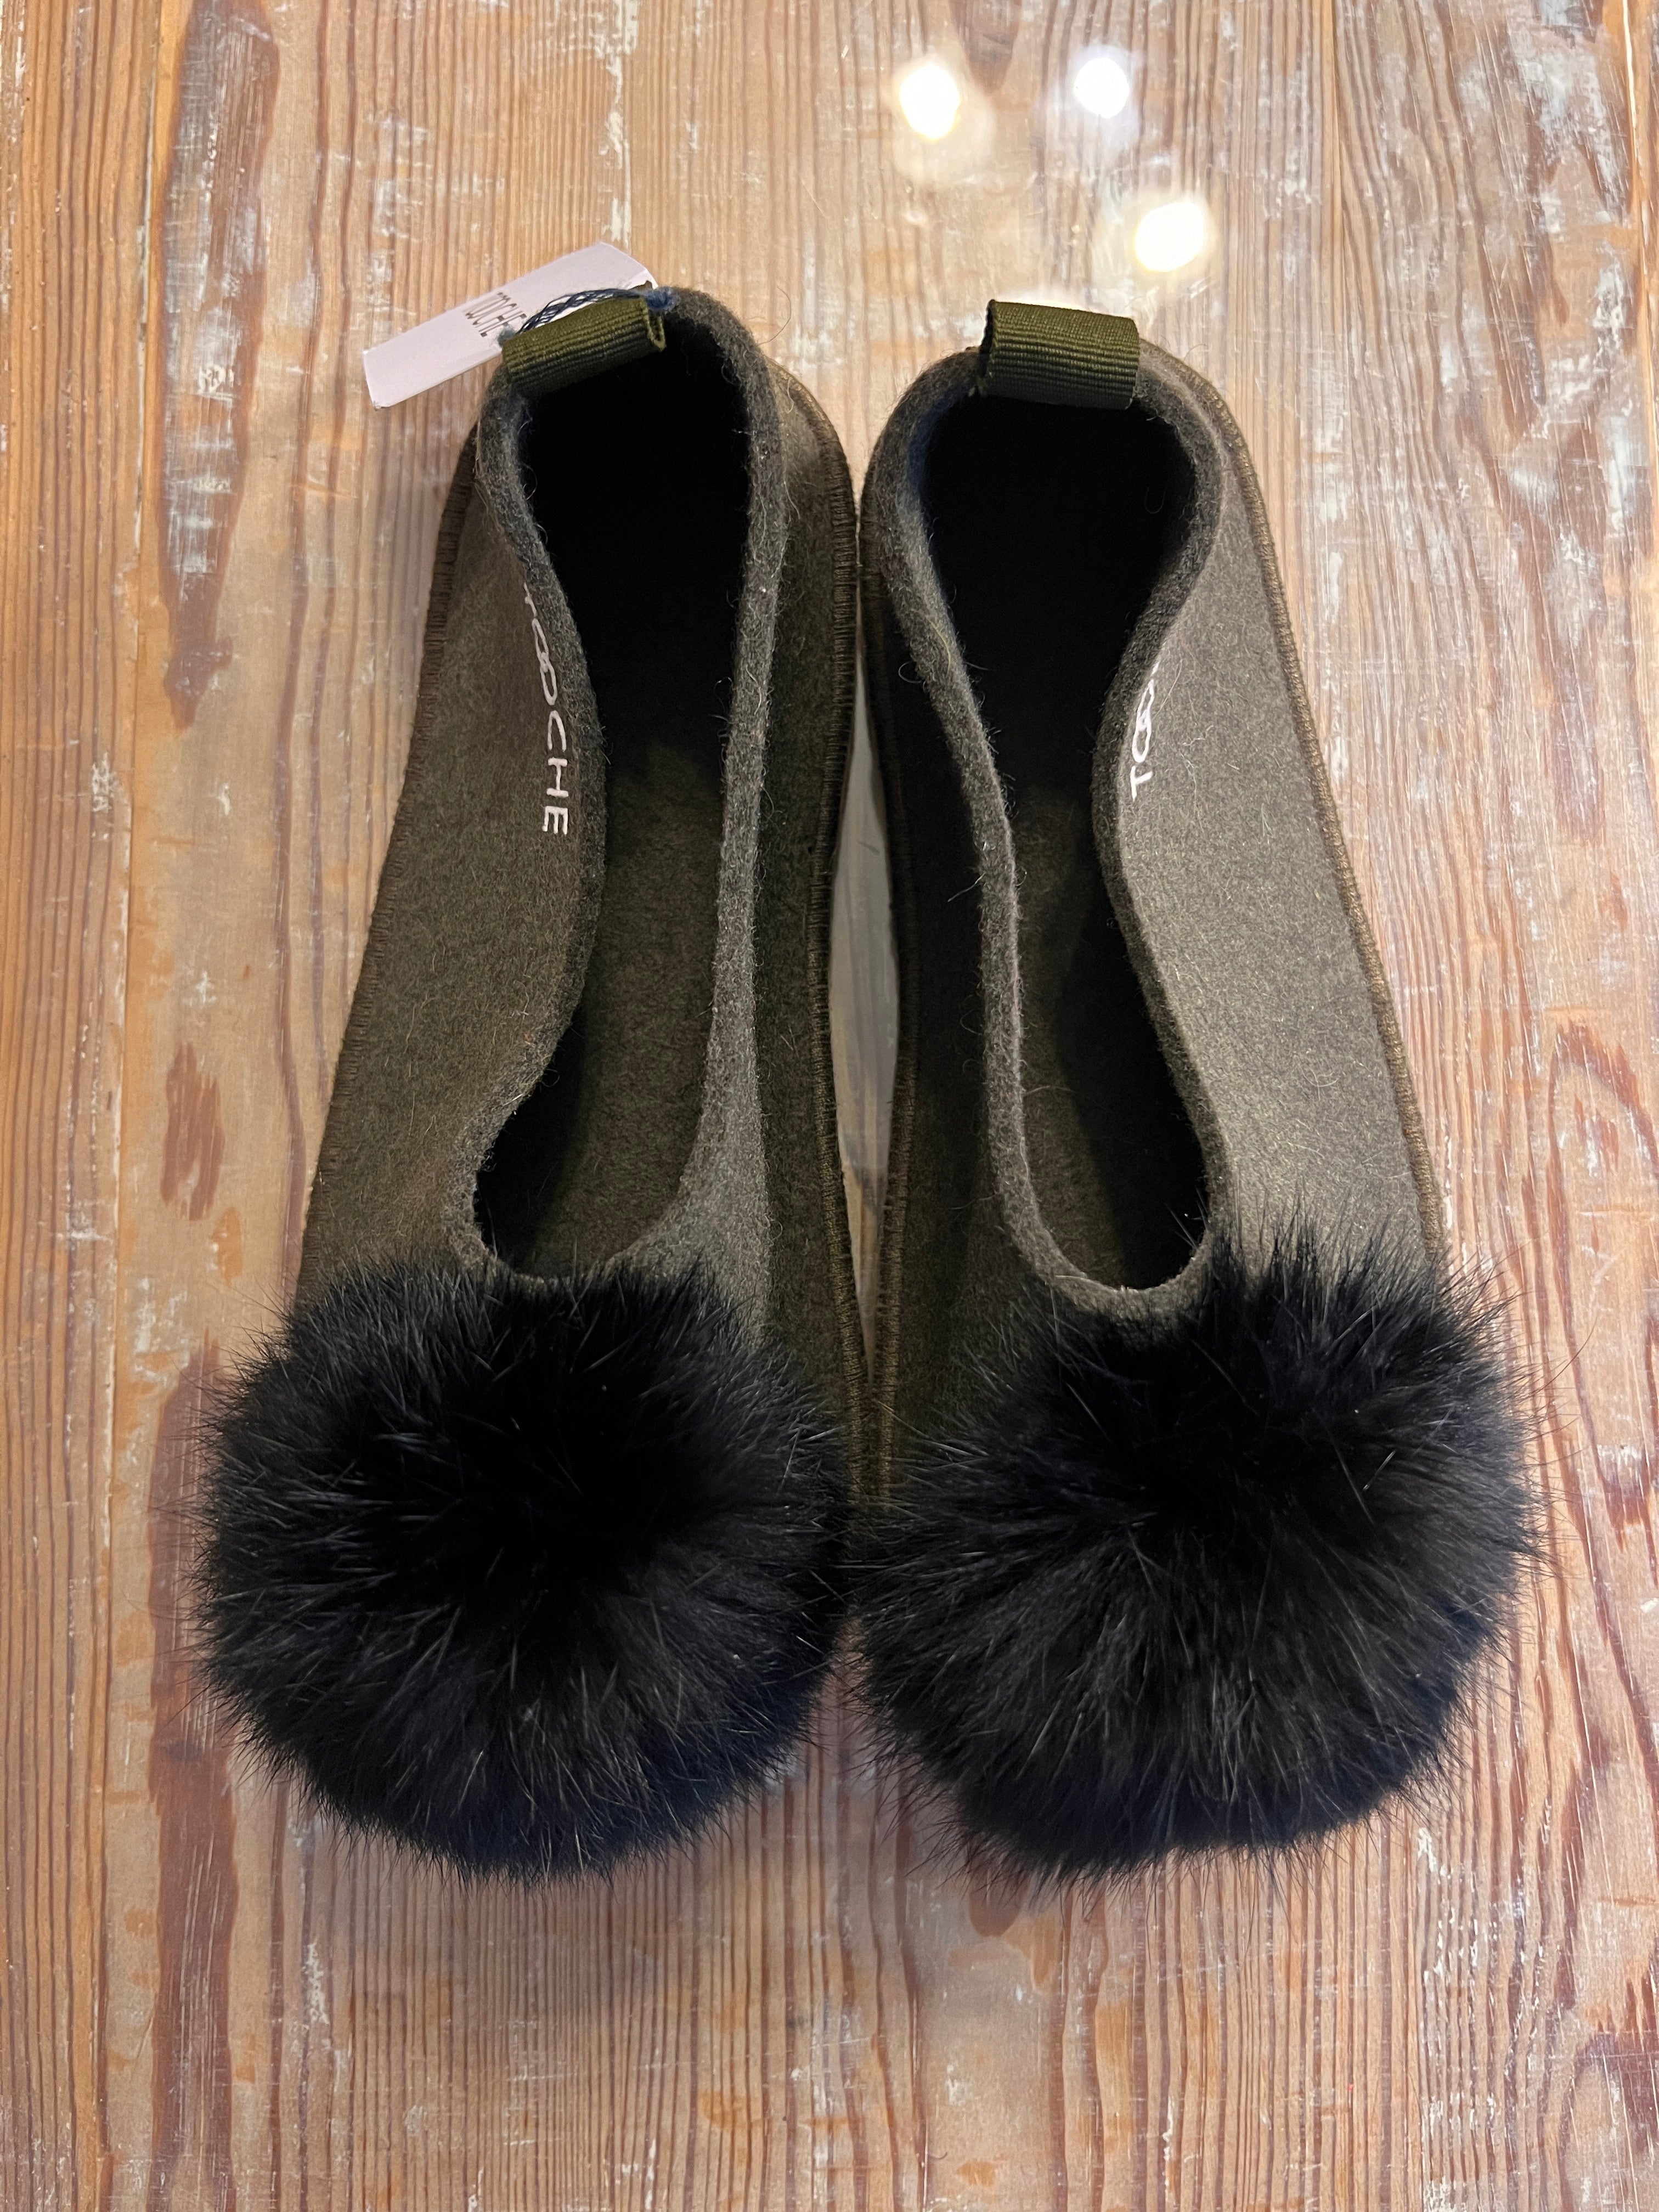 KHAKI slippers